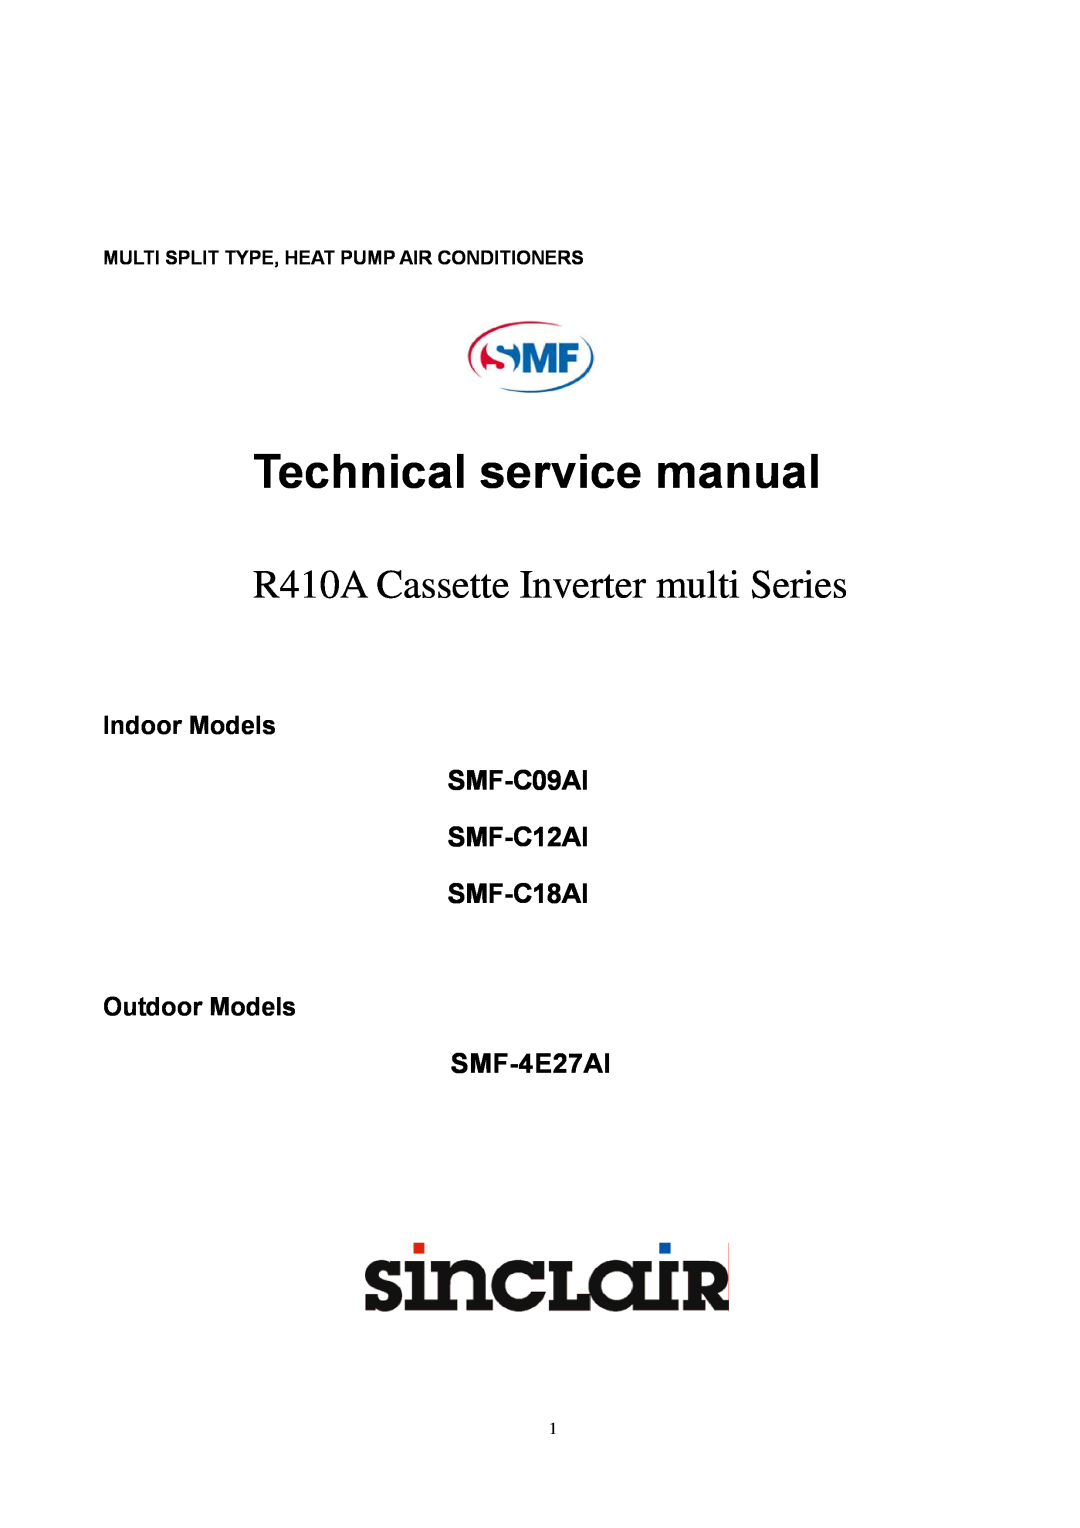 Sinclair service manual SMF-C09AI SMF-C12AI SMF-C18AI, SMF-4E27AI, Technical service manual, Indoor Models 